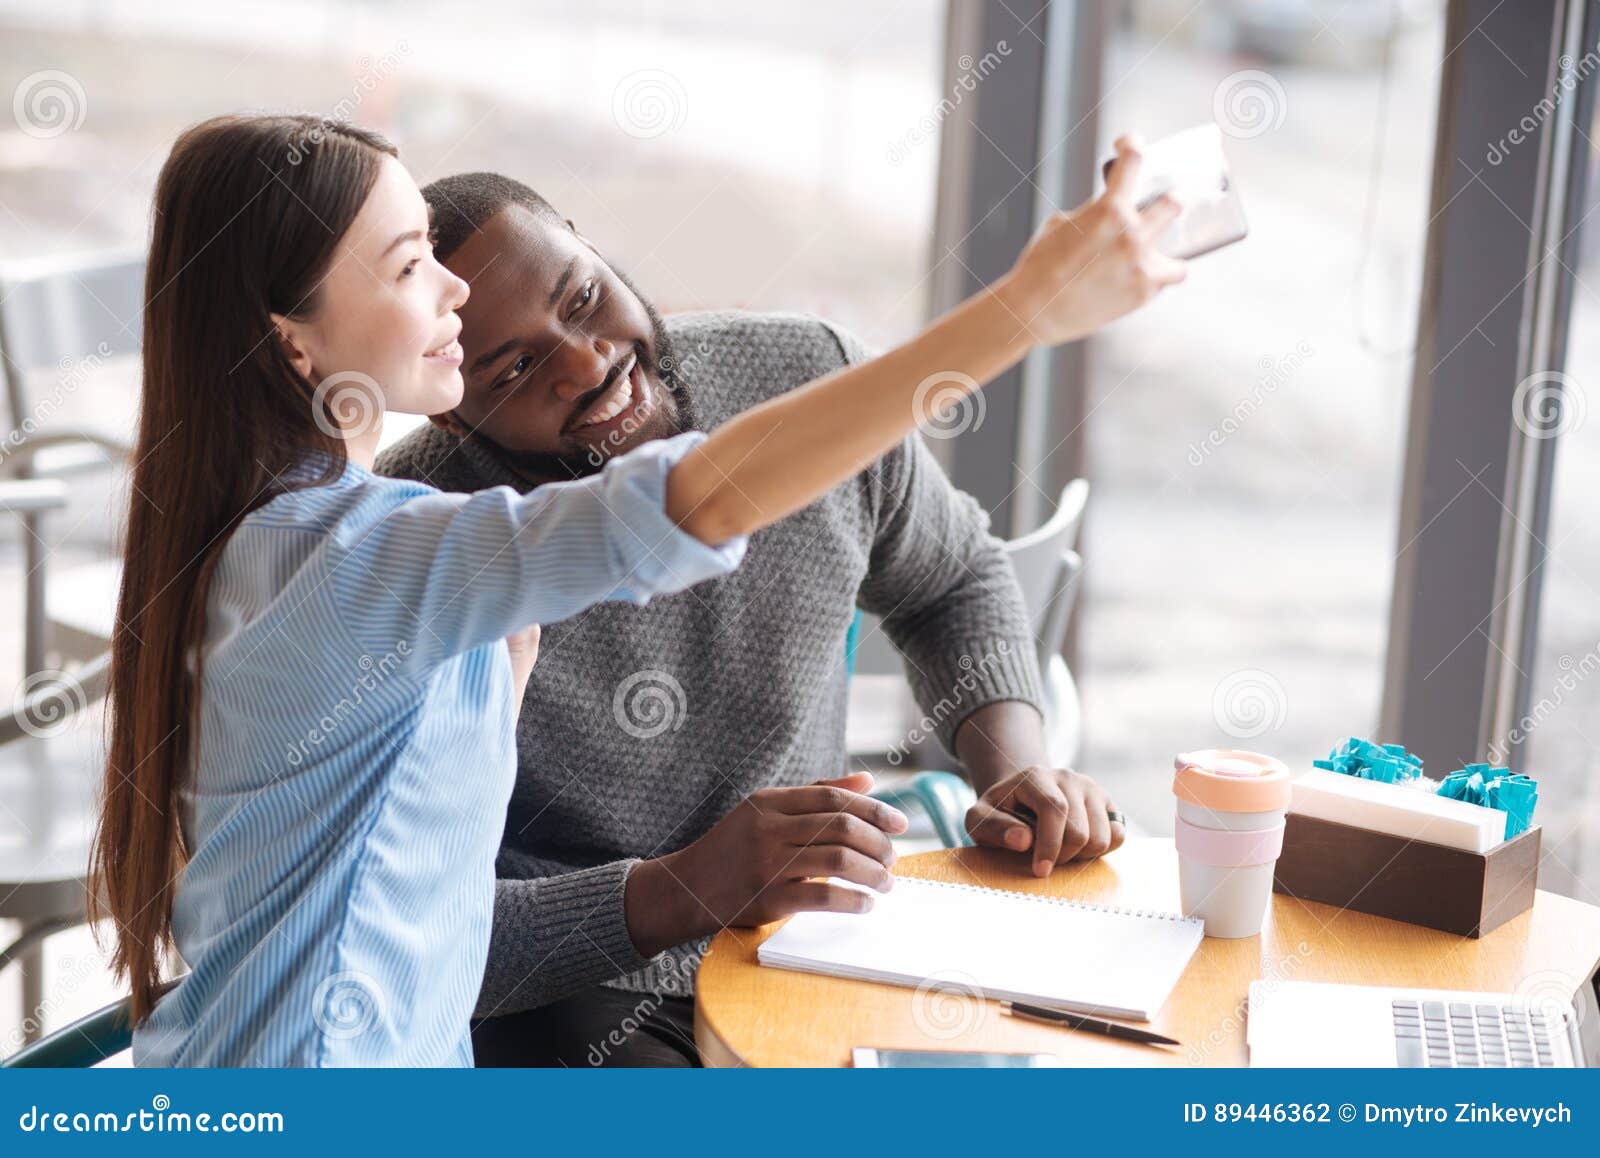 https://thumbs.dreamstime.com/z/international-couple-doing-selfie-lets-post-pretty-young-women-her-male-friend-sitting-near-big-window-89446362.jpg